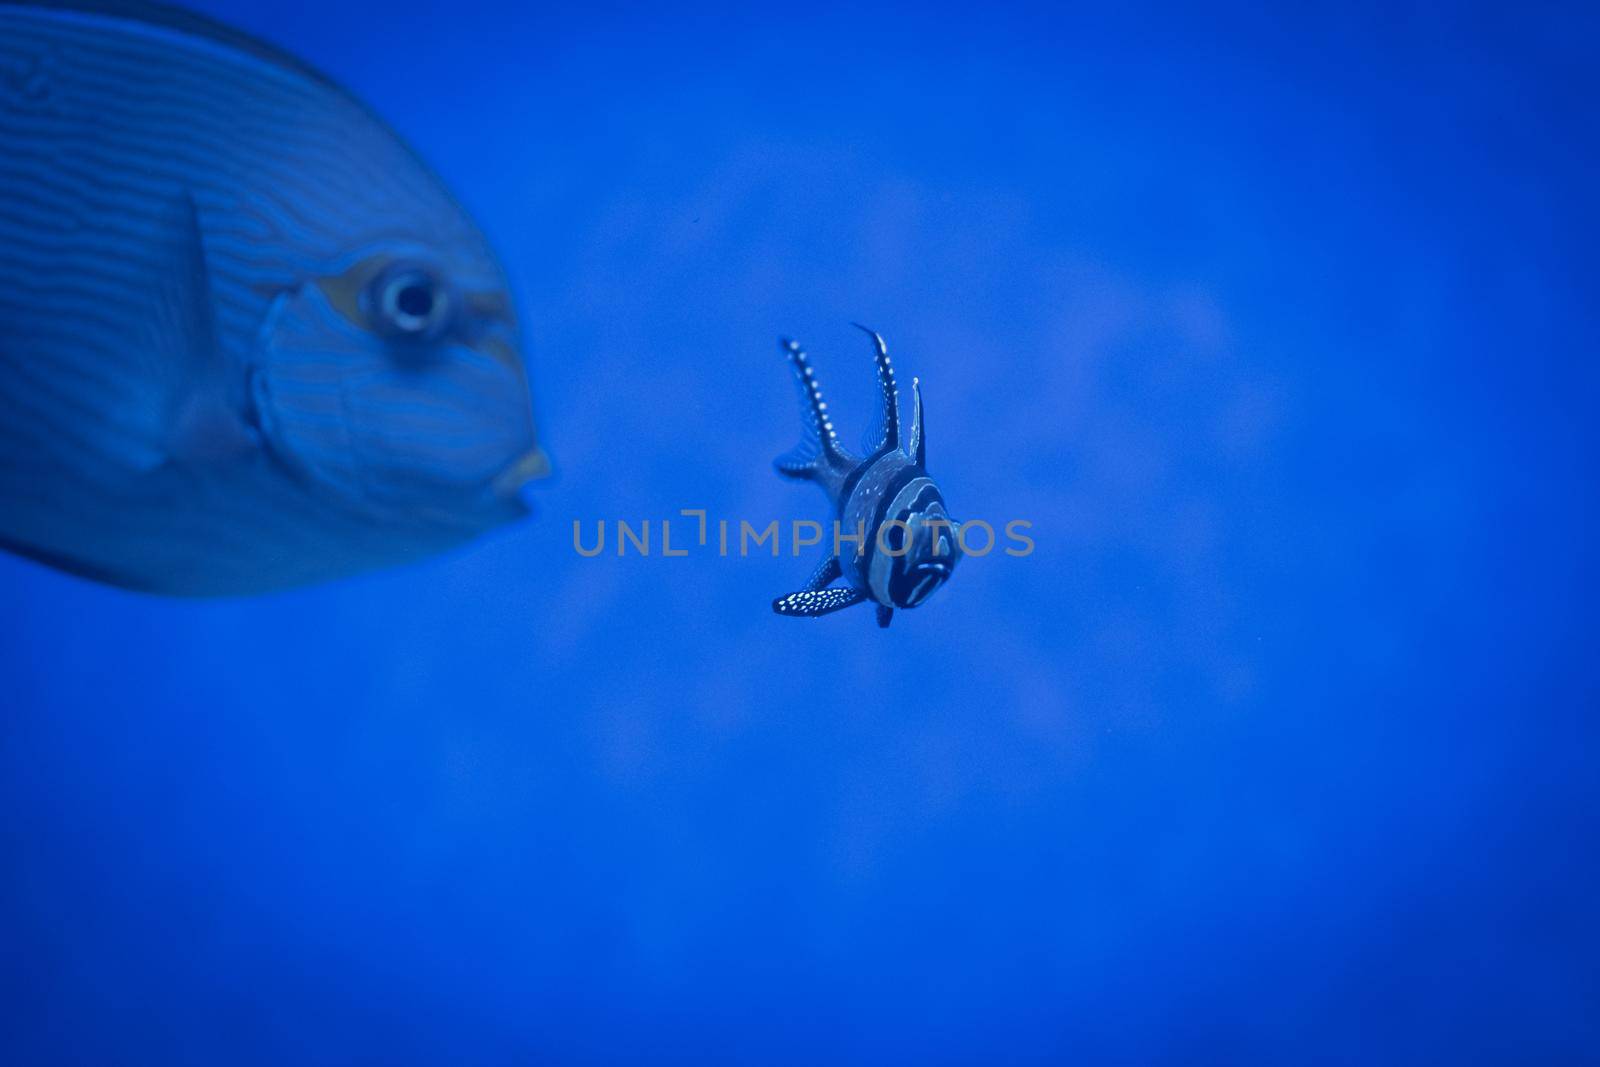 Marine aquarium and colorful fish. Pterapogon kauderni, Banggai cardinal fish in a blue water. Sea fish by igor010